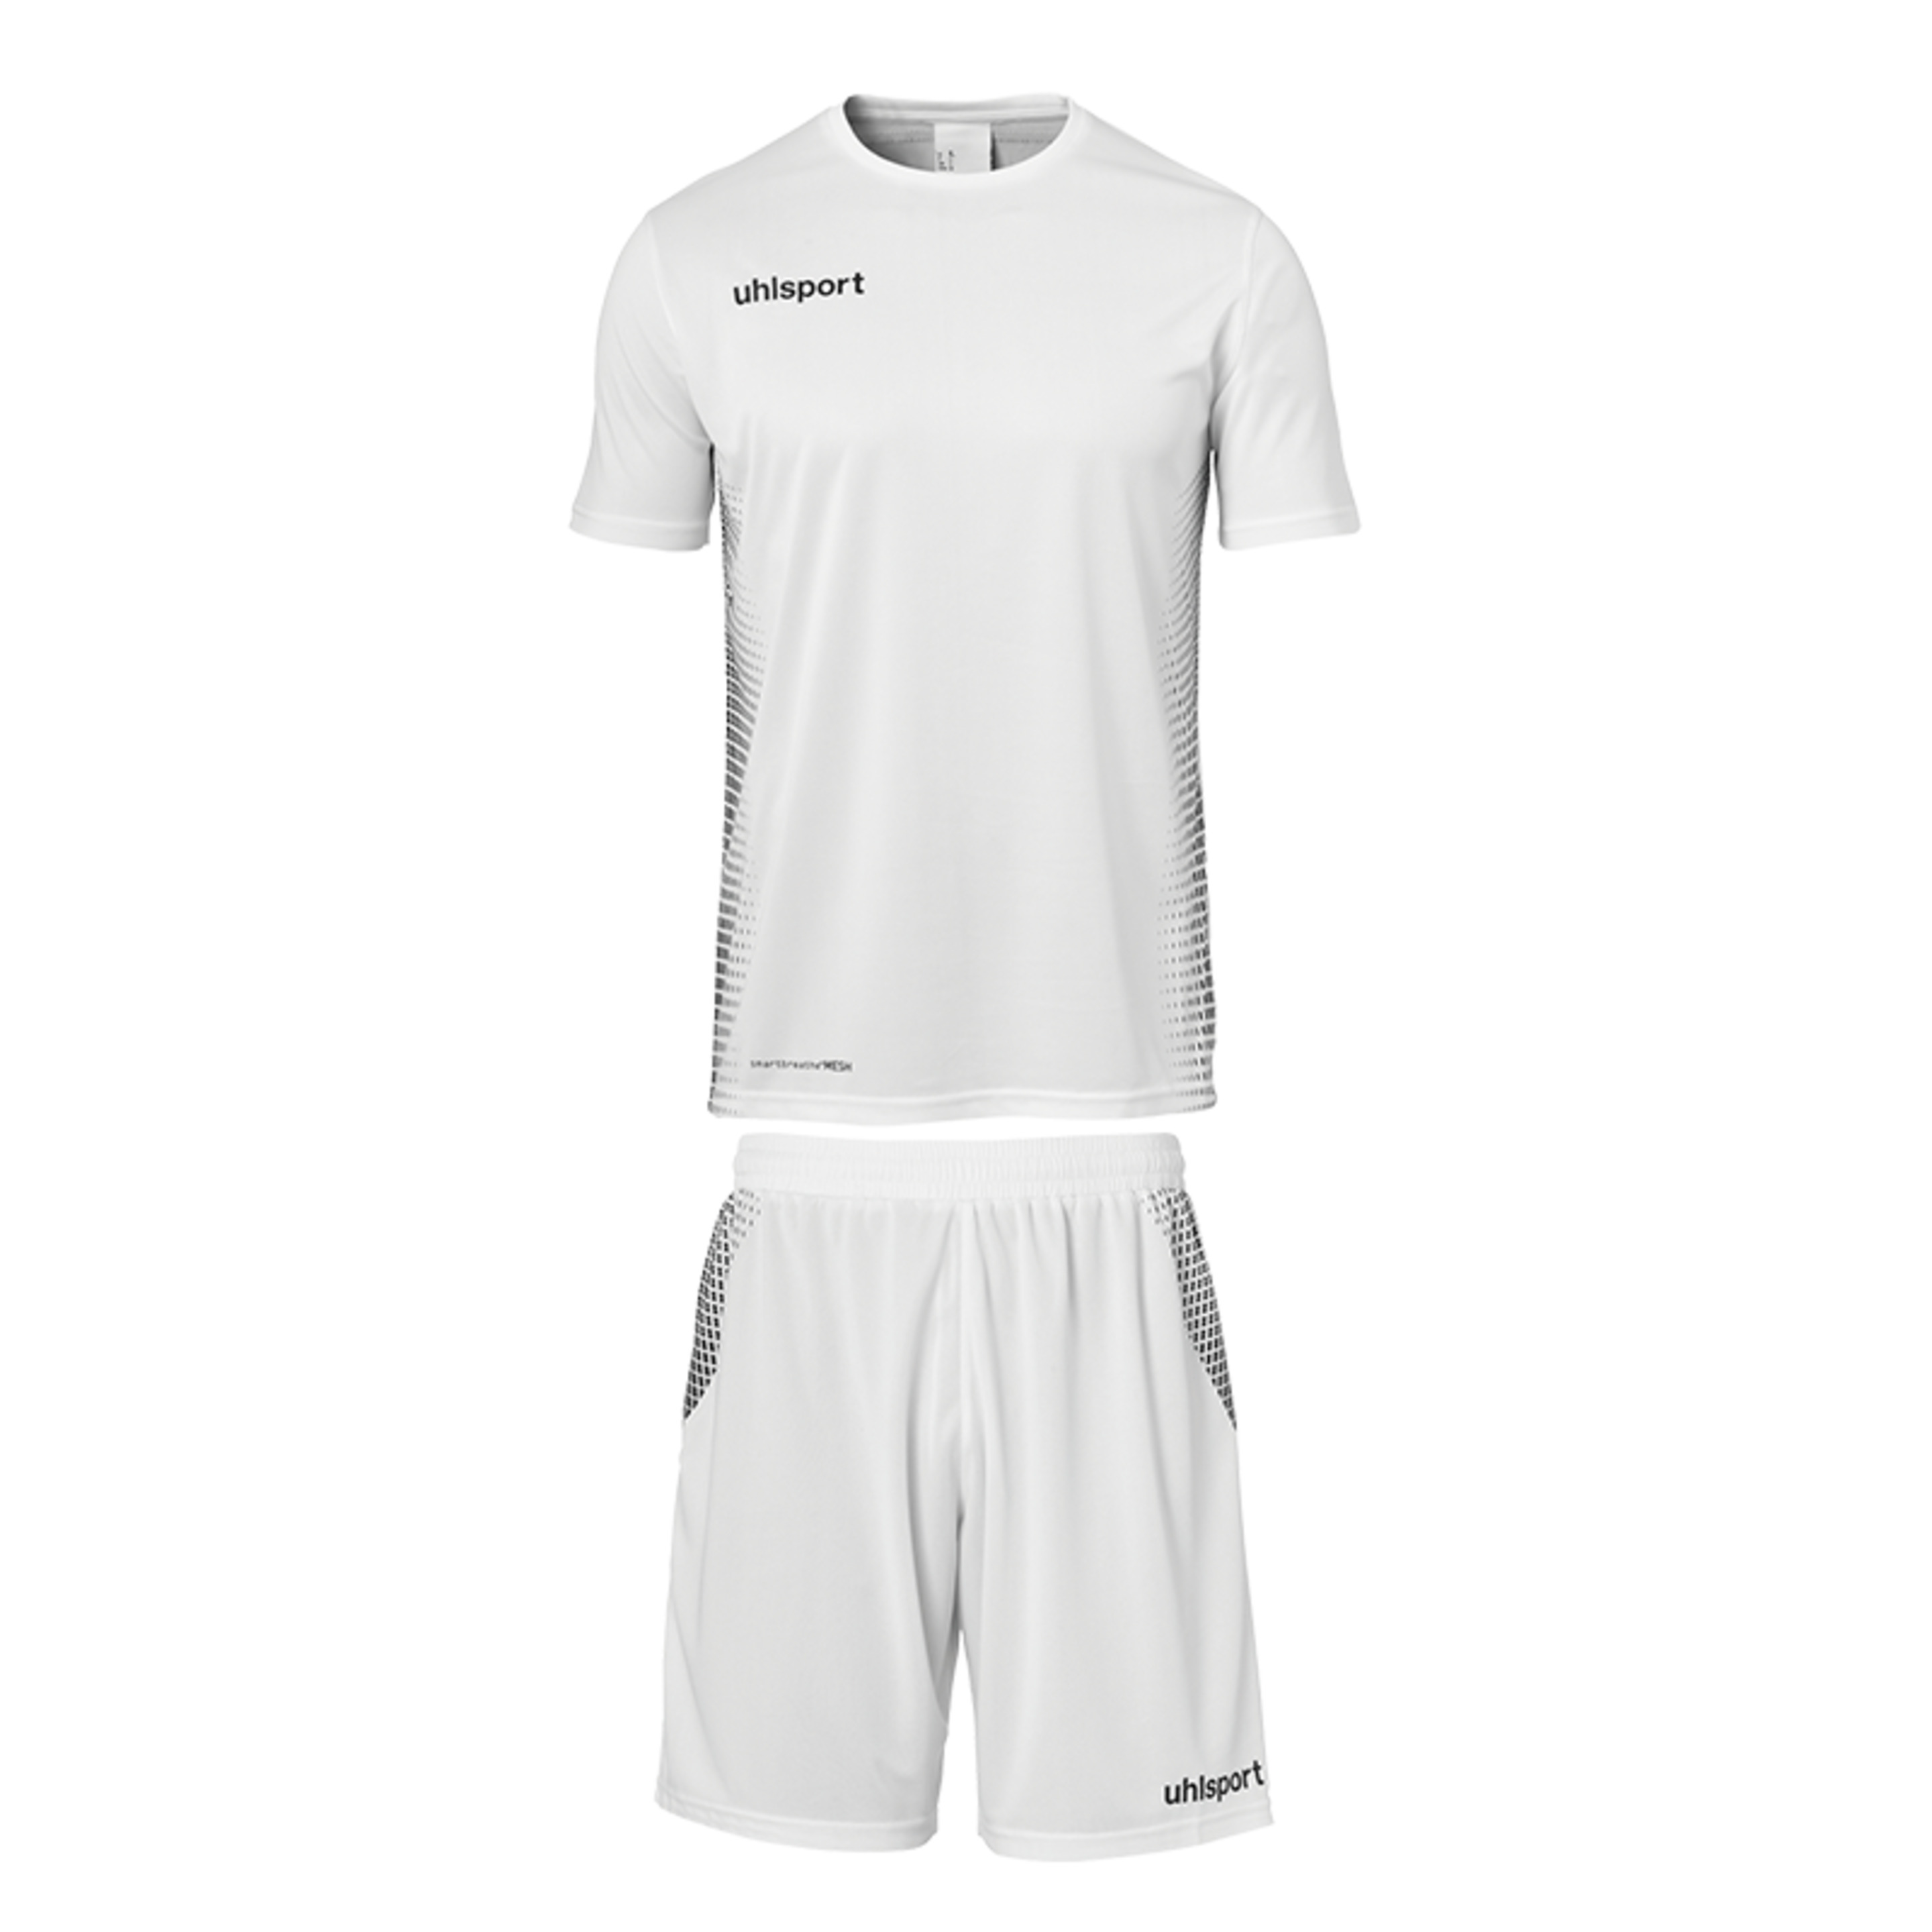 Camiseta Y Pantalón Uhlsport Score Kit Ss - Negro/Blanco - Score Kit Ss Blanco/negro Uhlsport  MKP